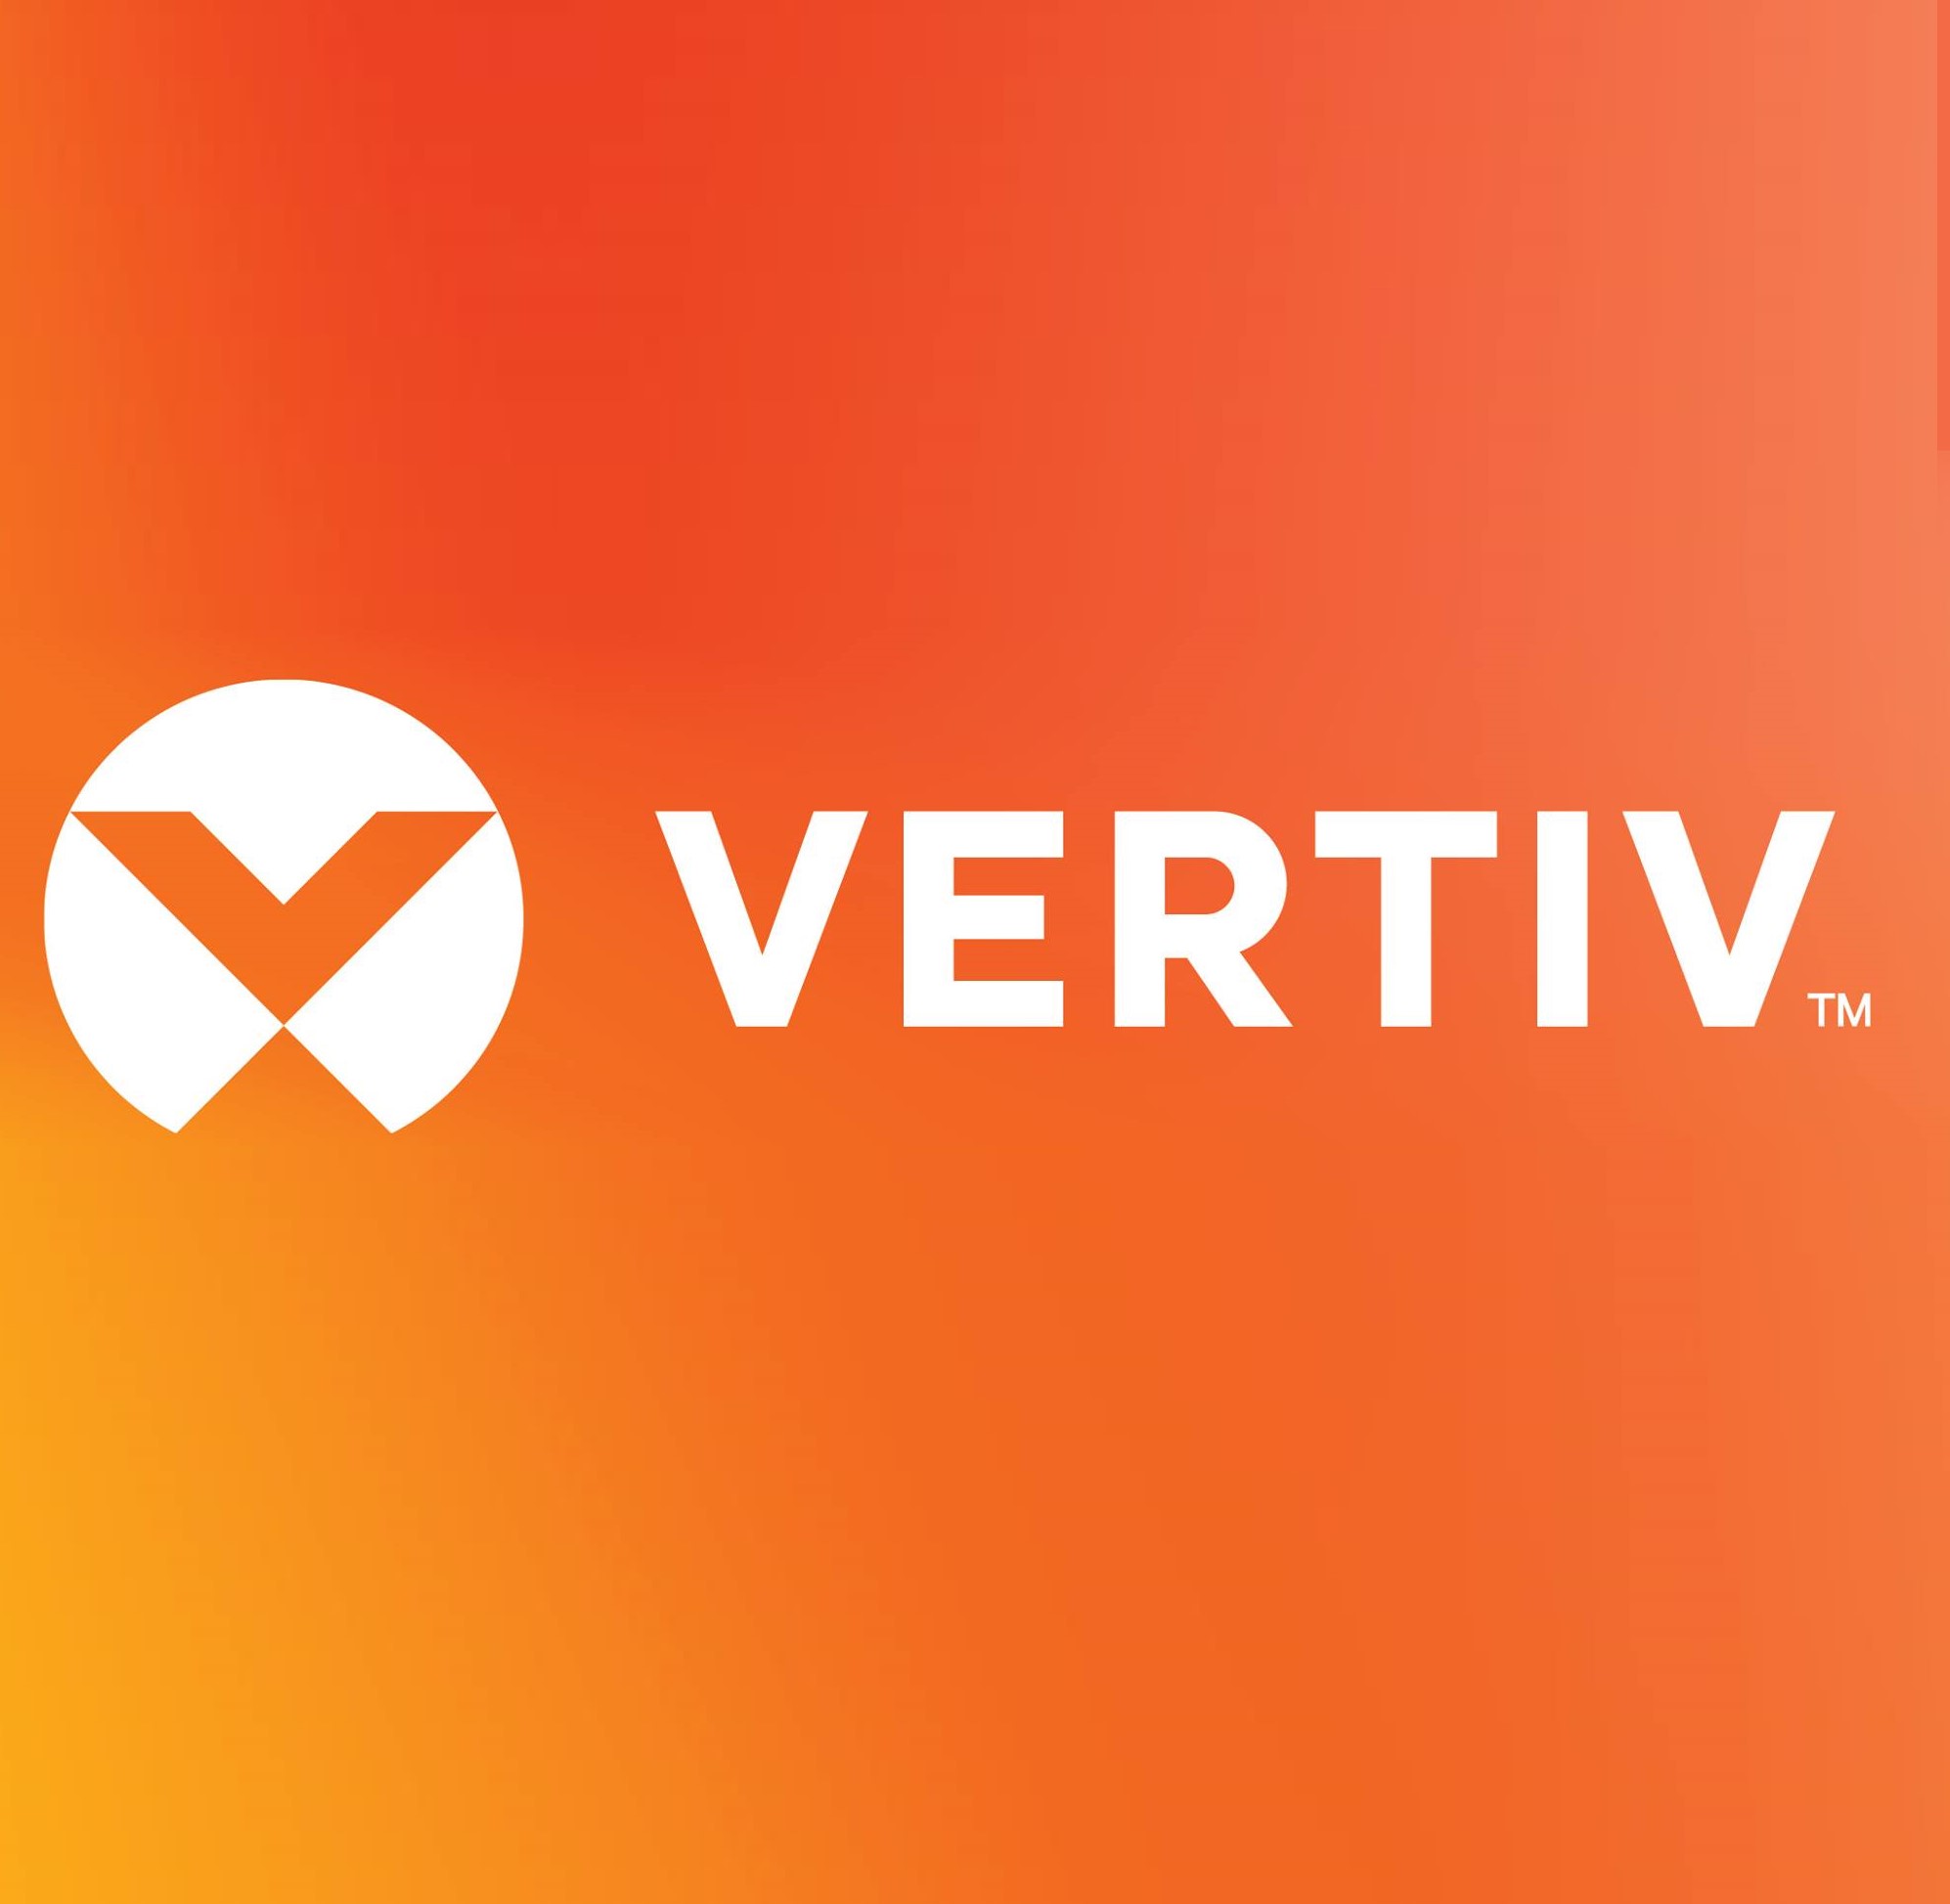 Vertiv Company